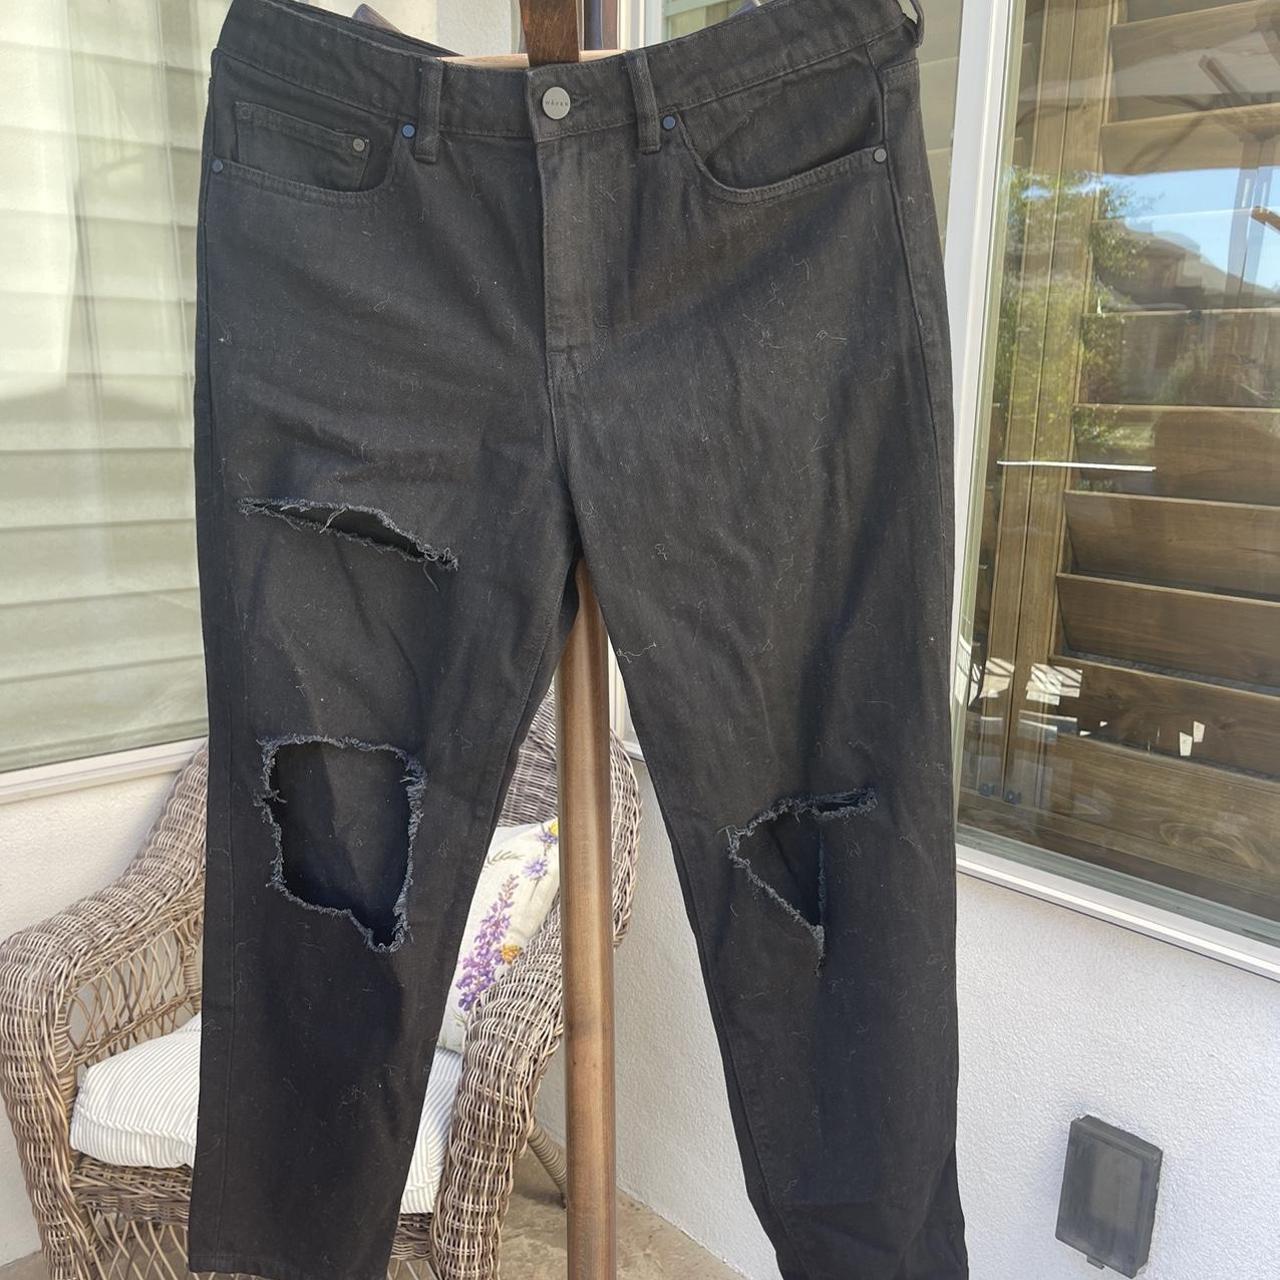 Product Image 1 - WAVEN black jean
Size 29
Worn 1-2